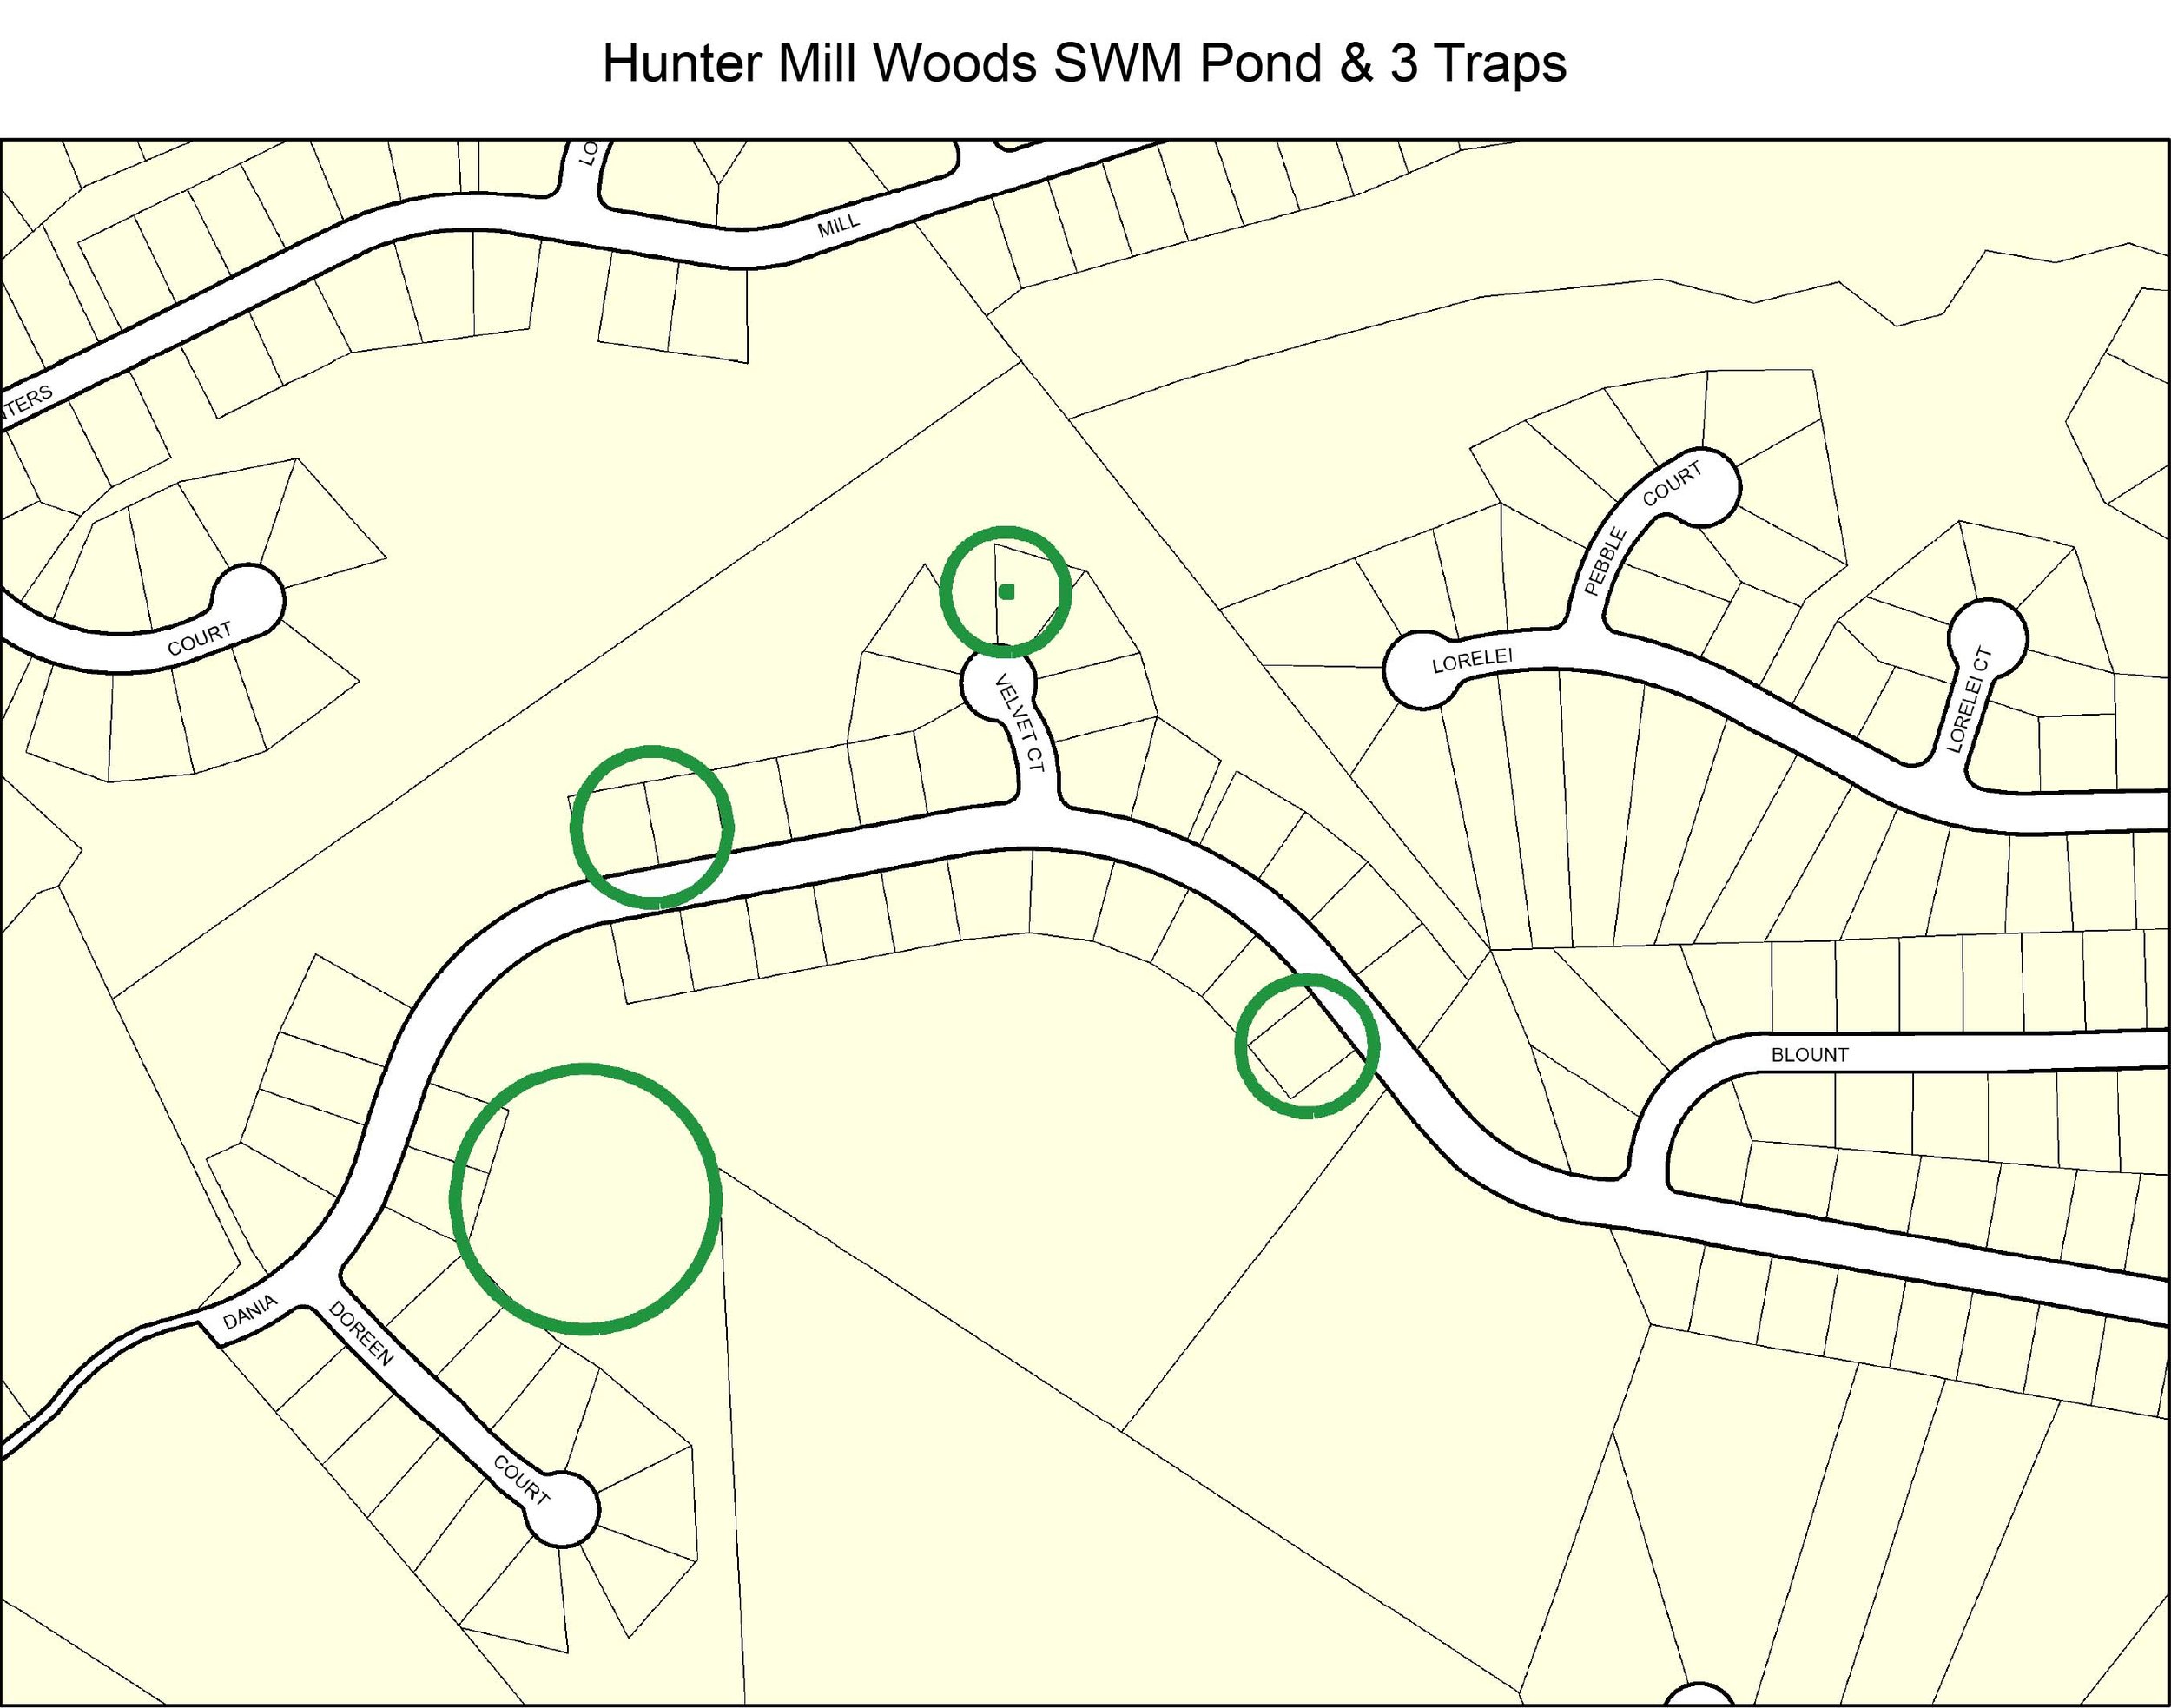 HNT SWM Pond and 3 Traps.jpg